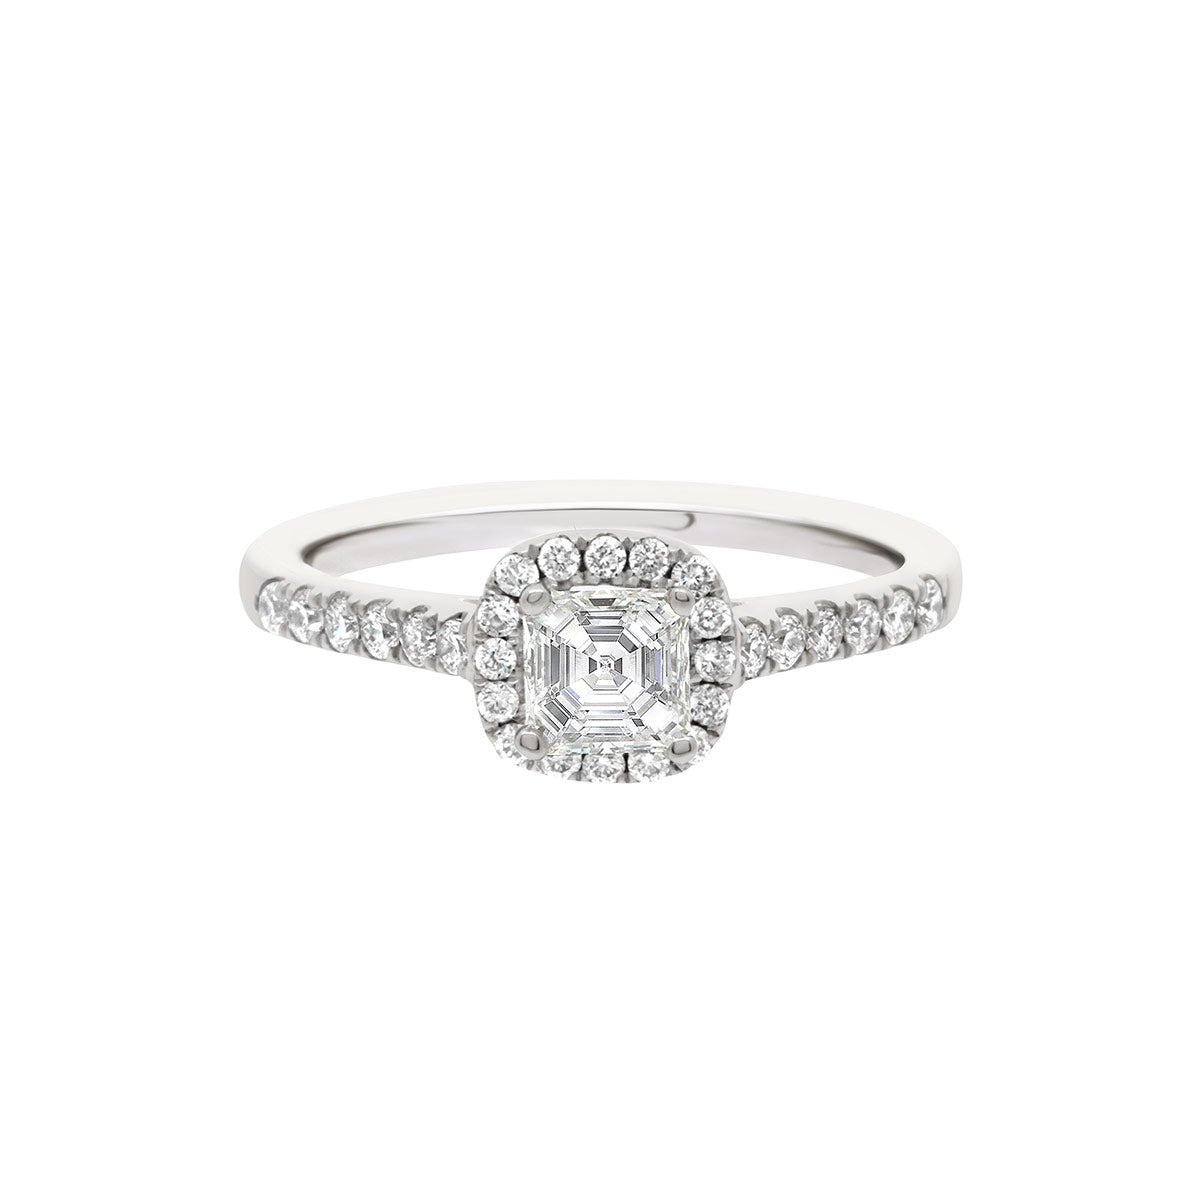 Asscher Halo Diamond Ring in white gold